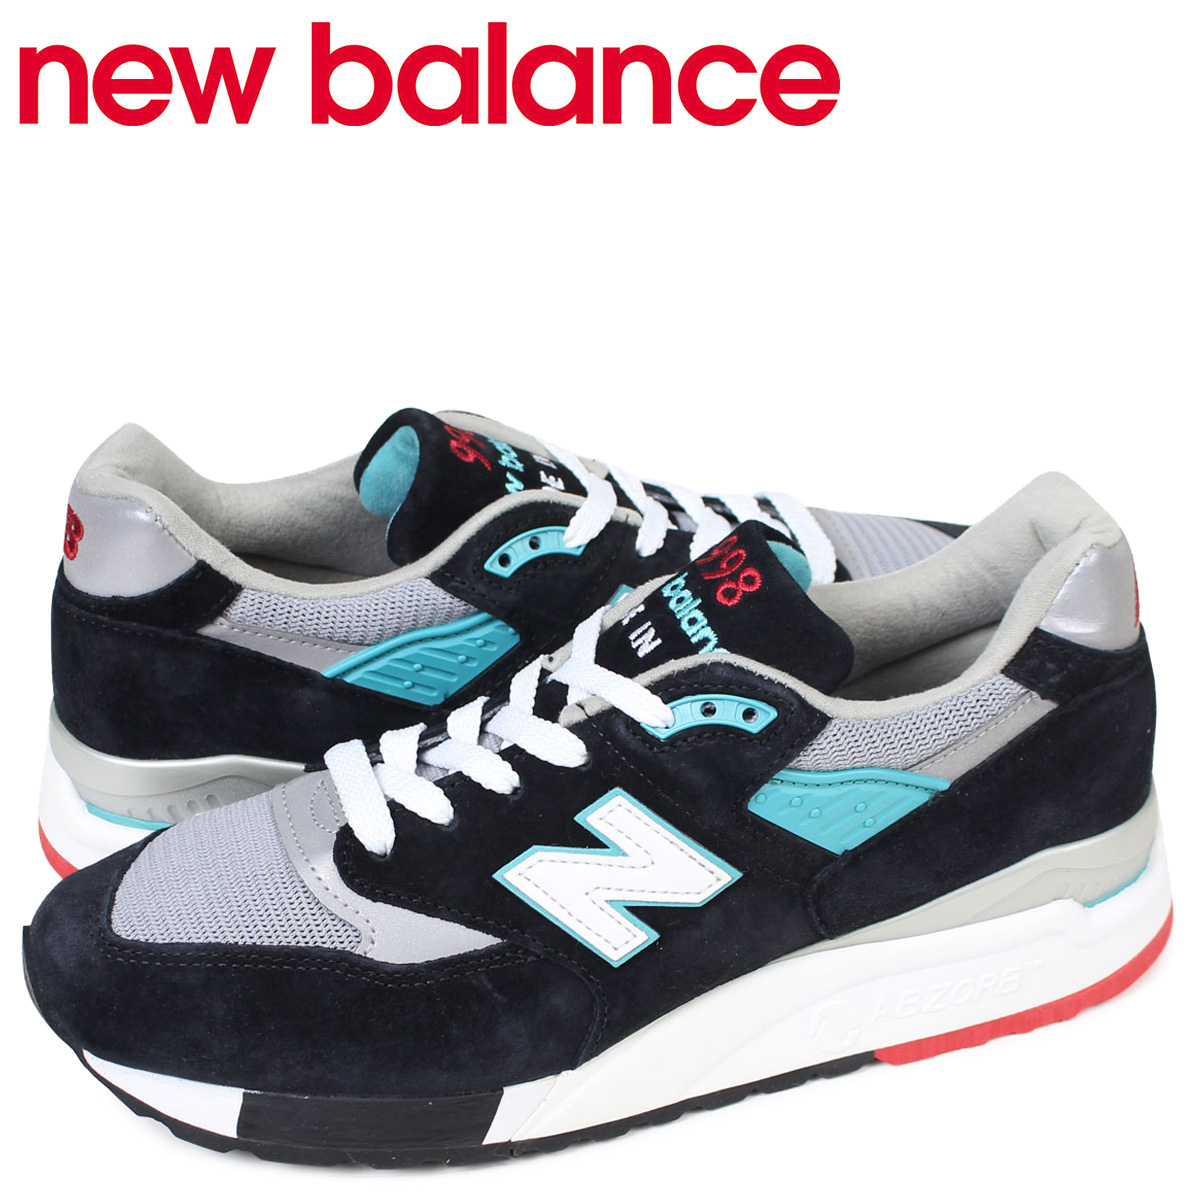 new balance 998 price